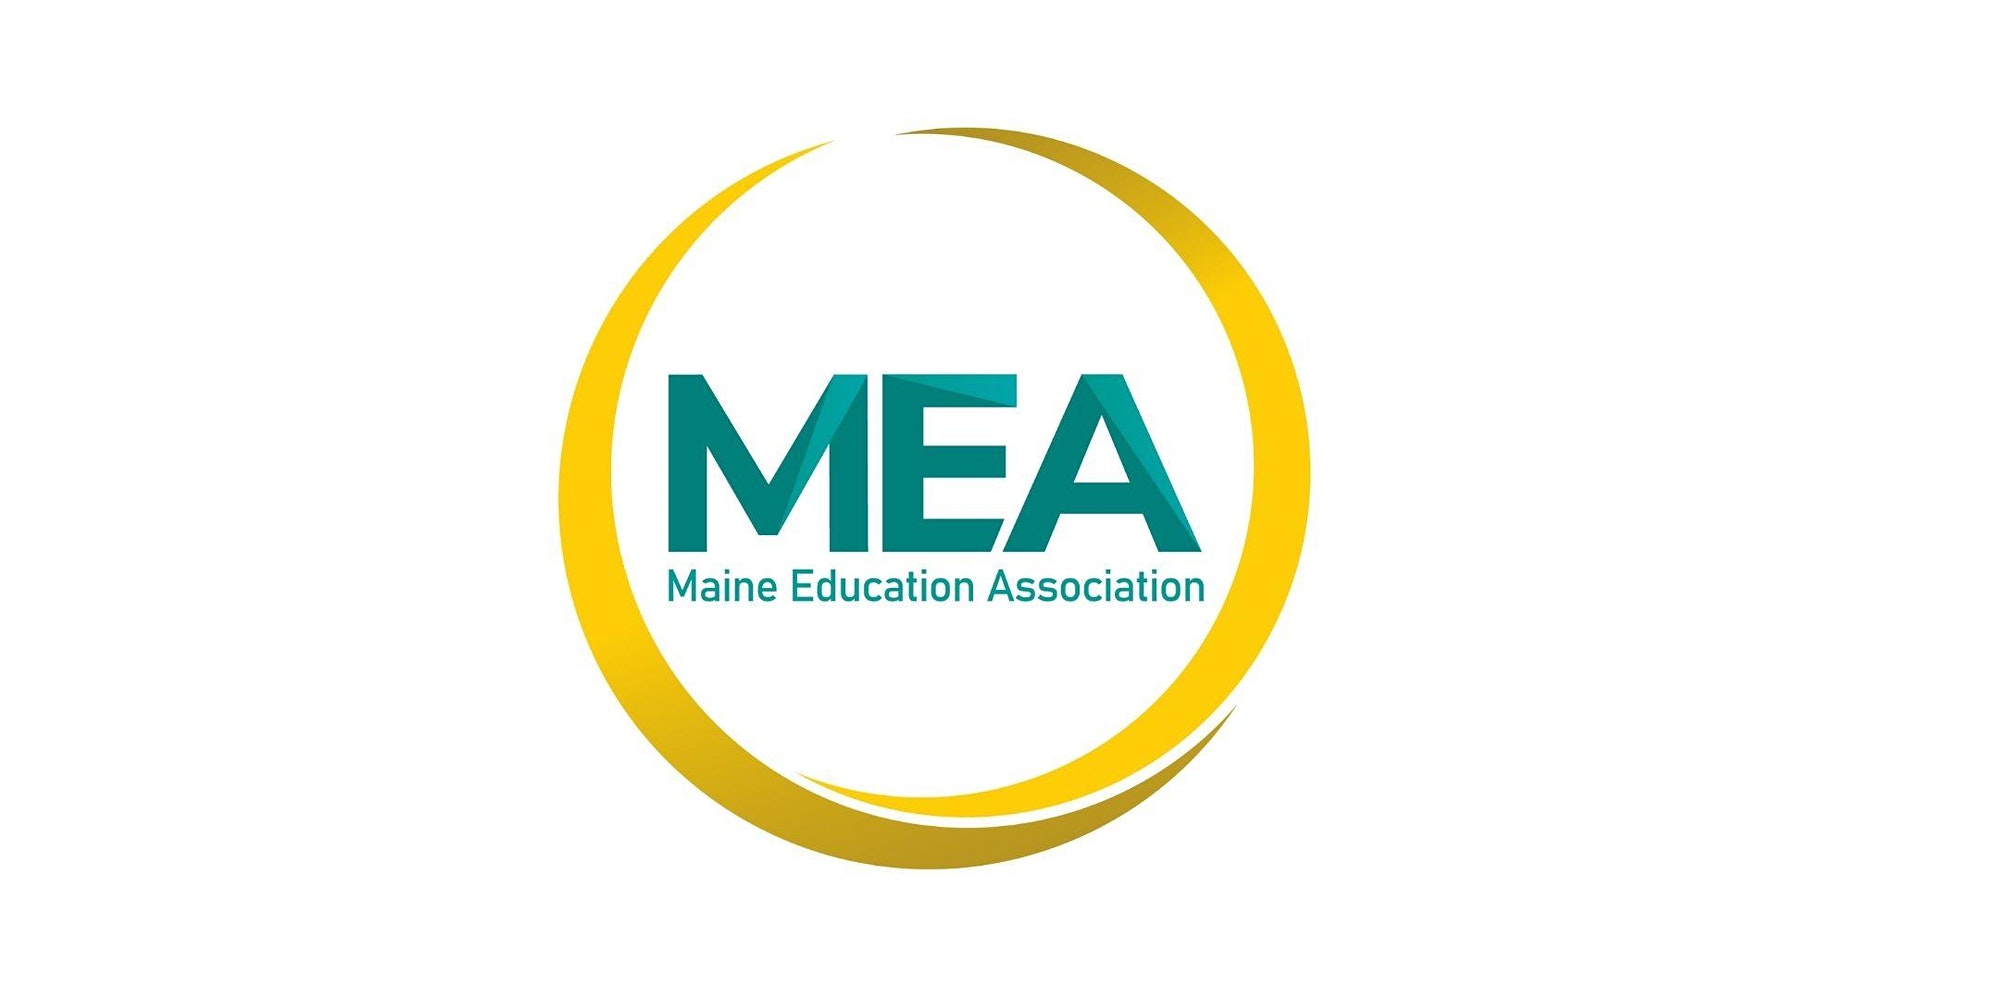 We Are MEA Maine Education Association